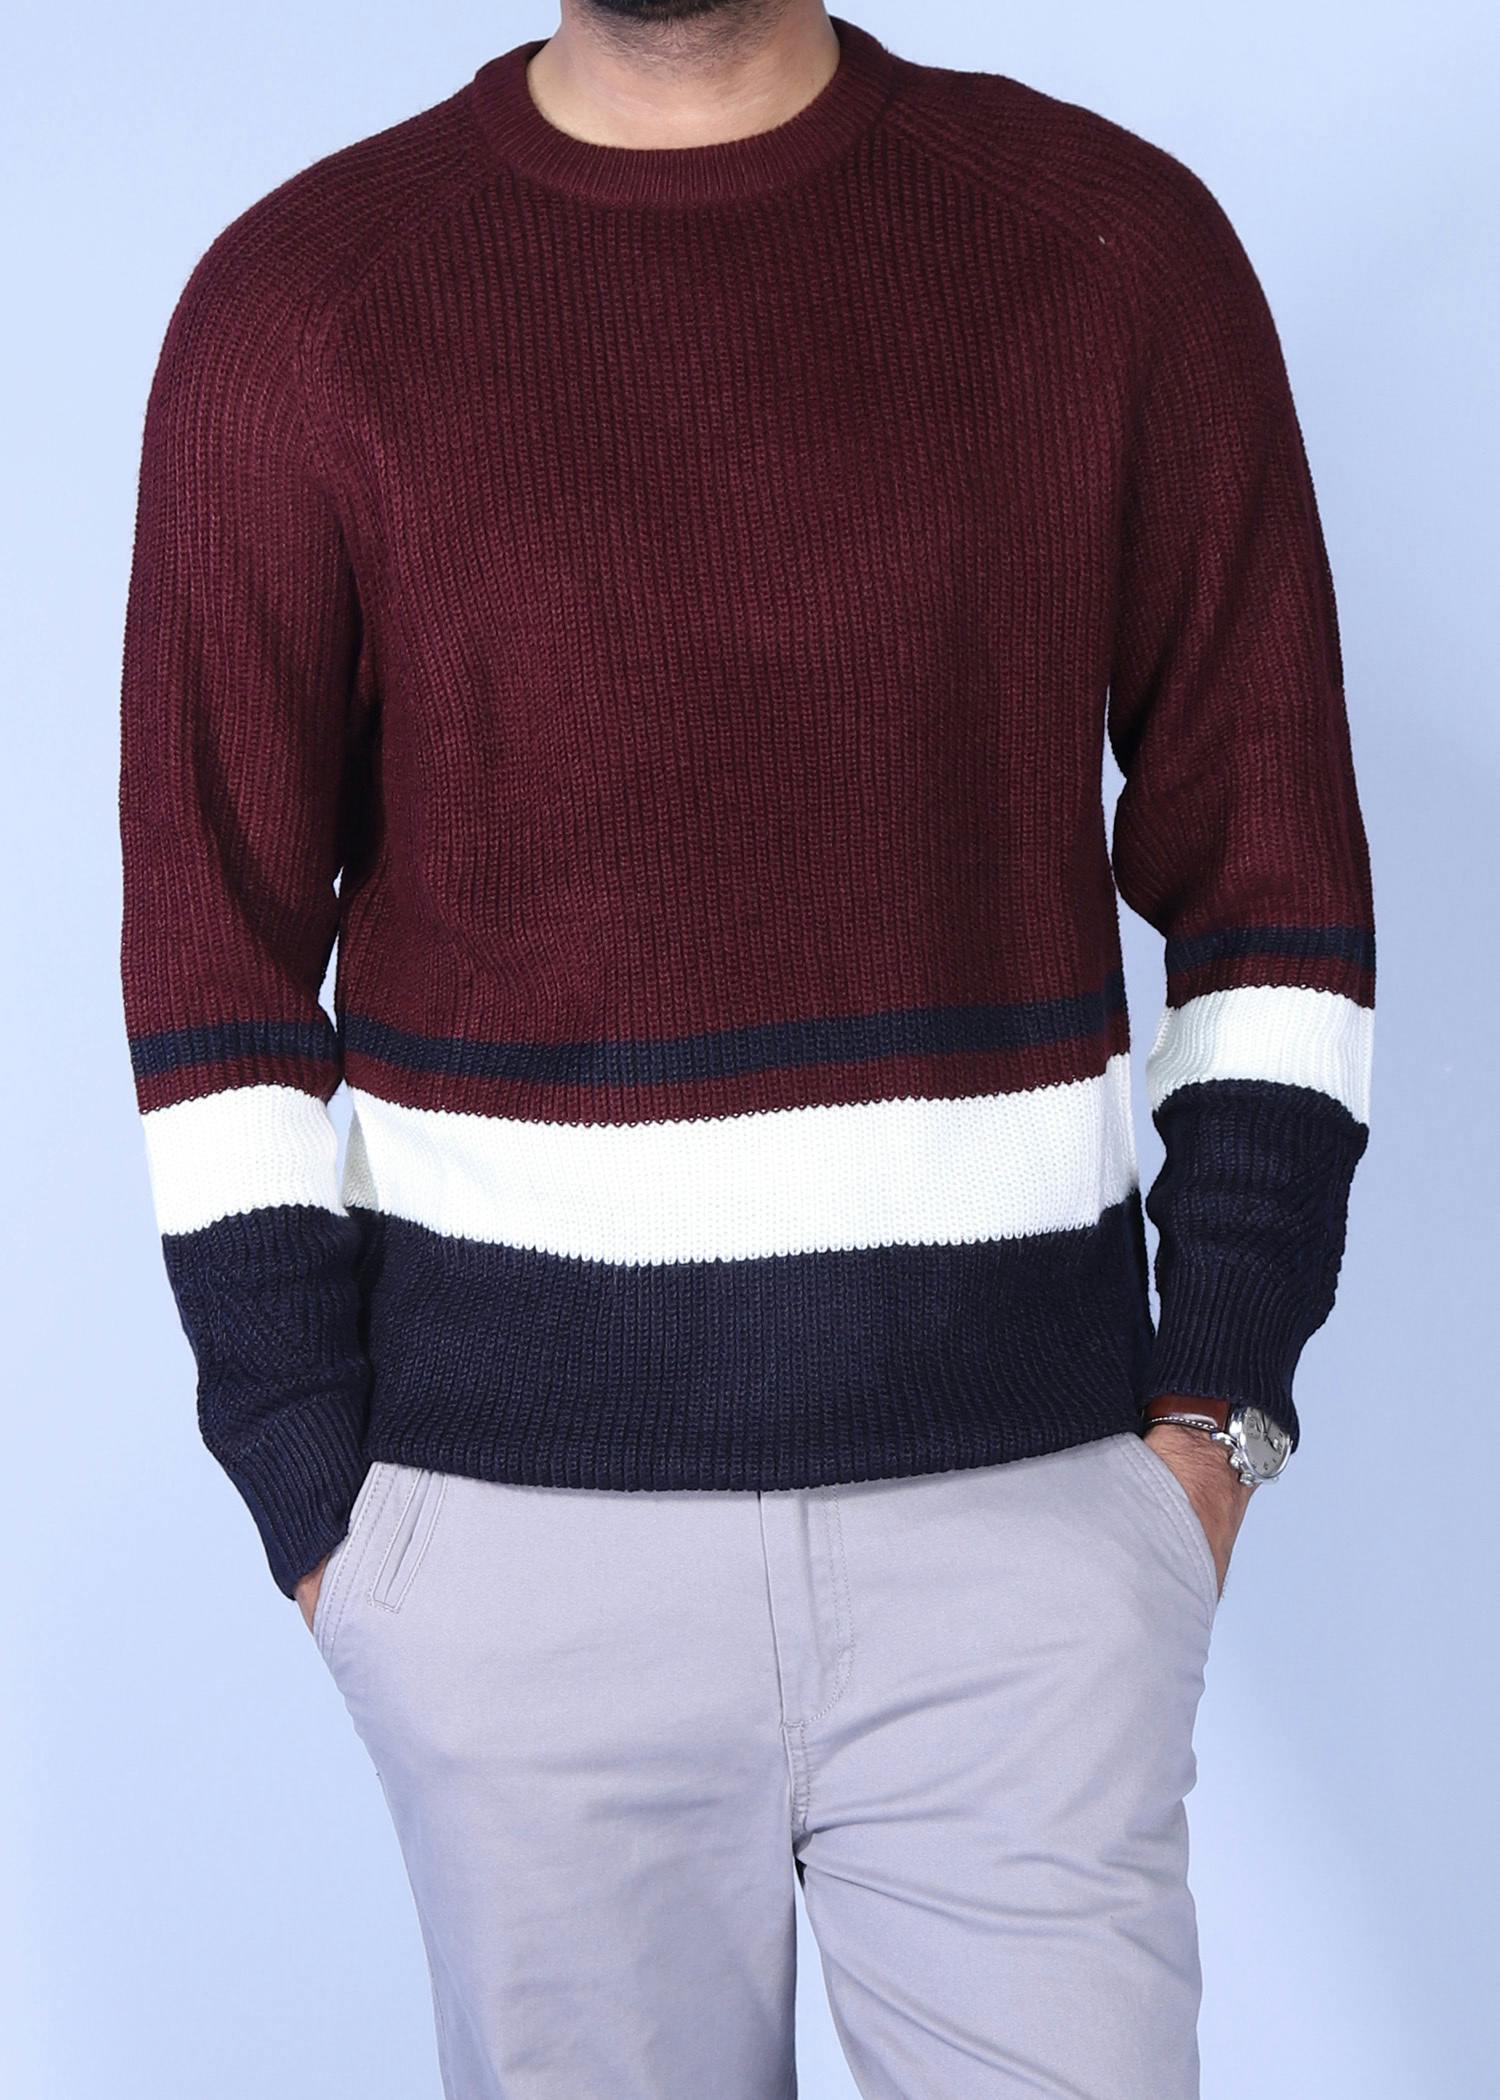 hillstar ii sweater bordeaux color half front view